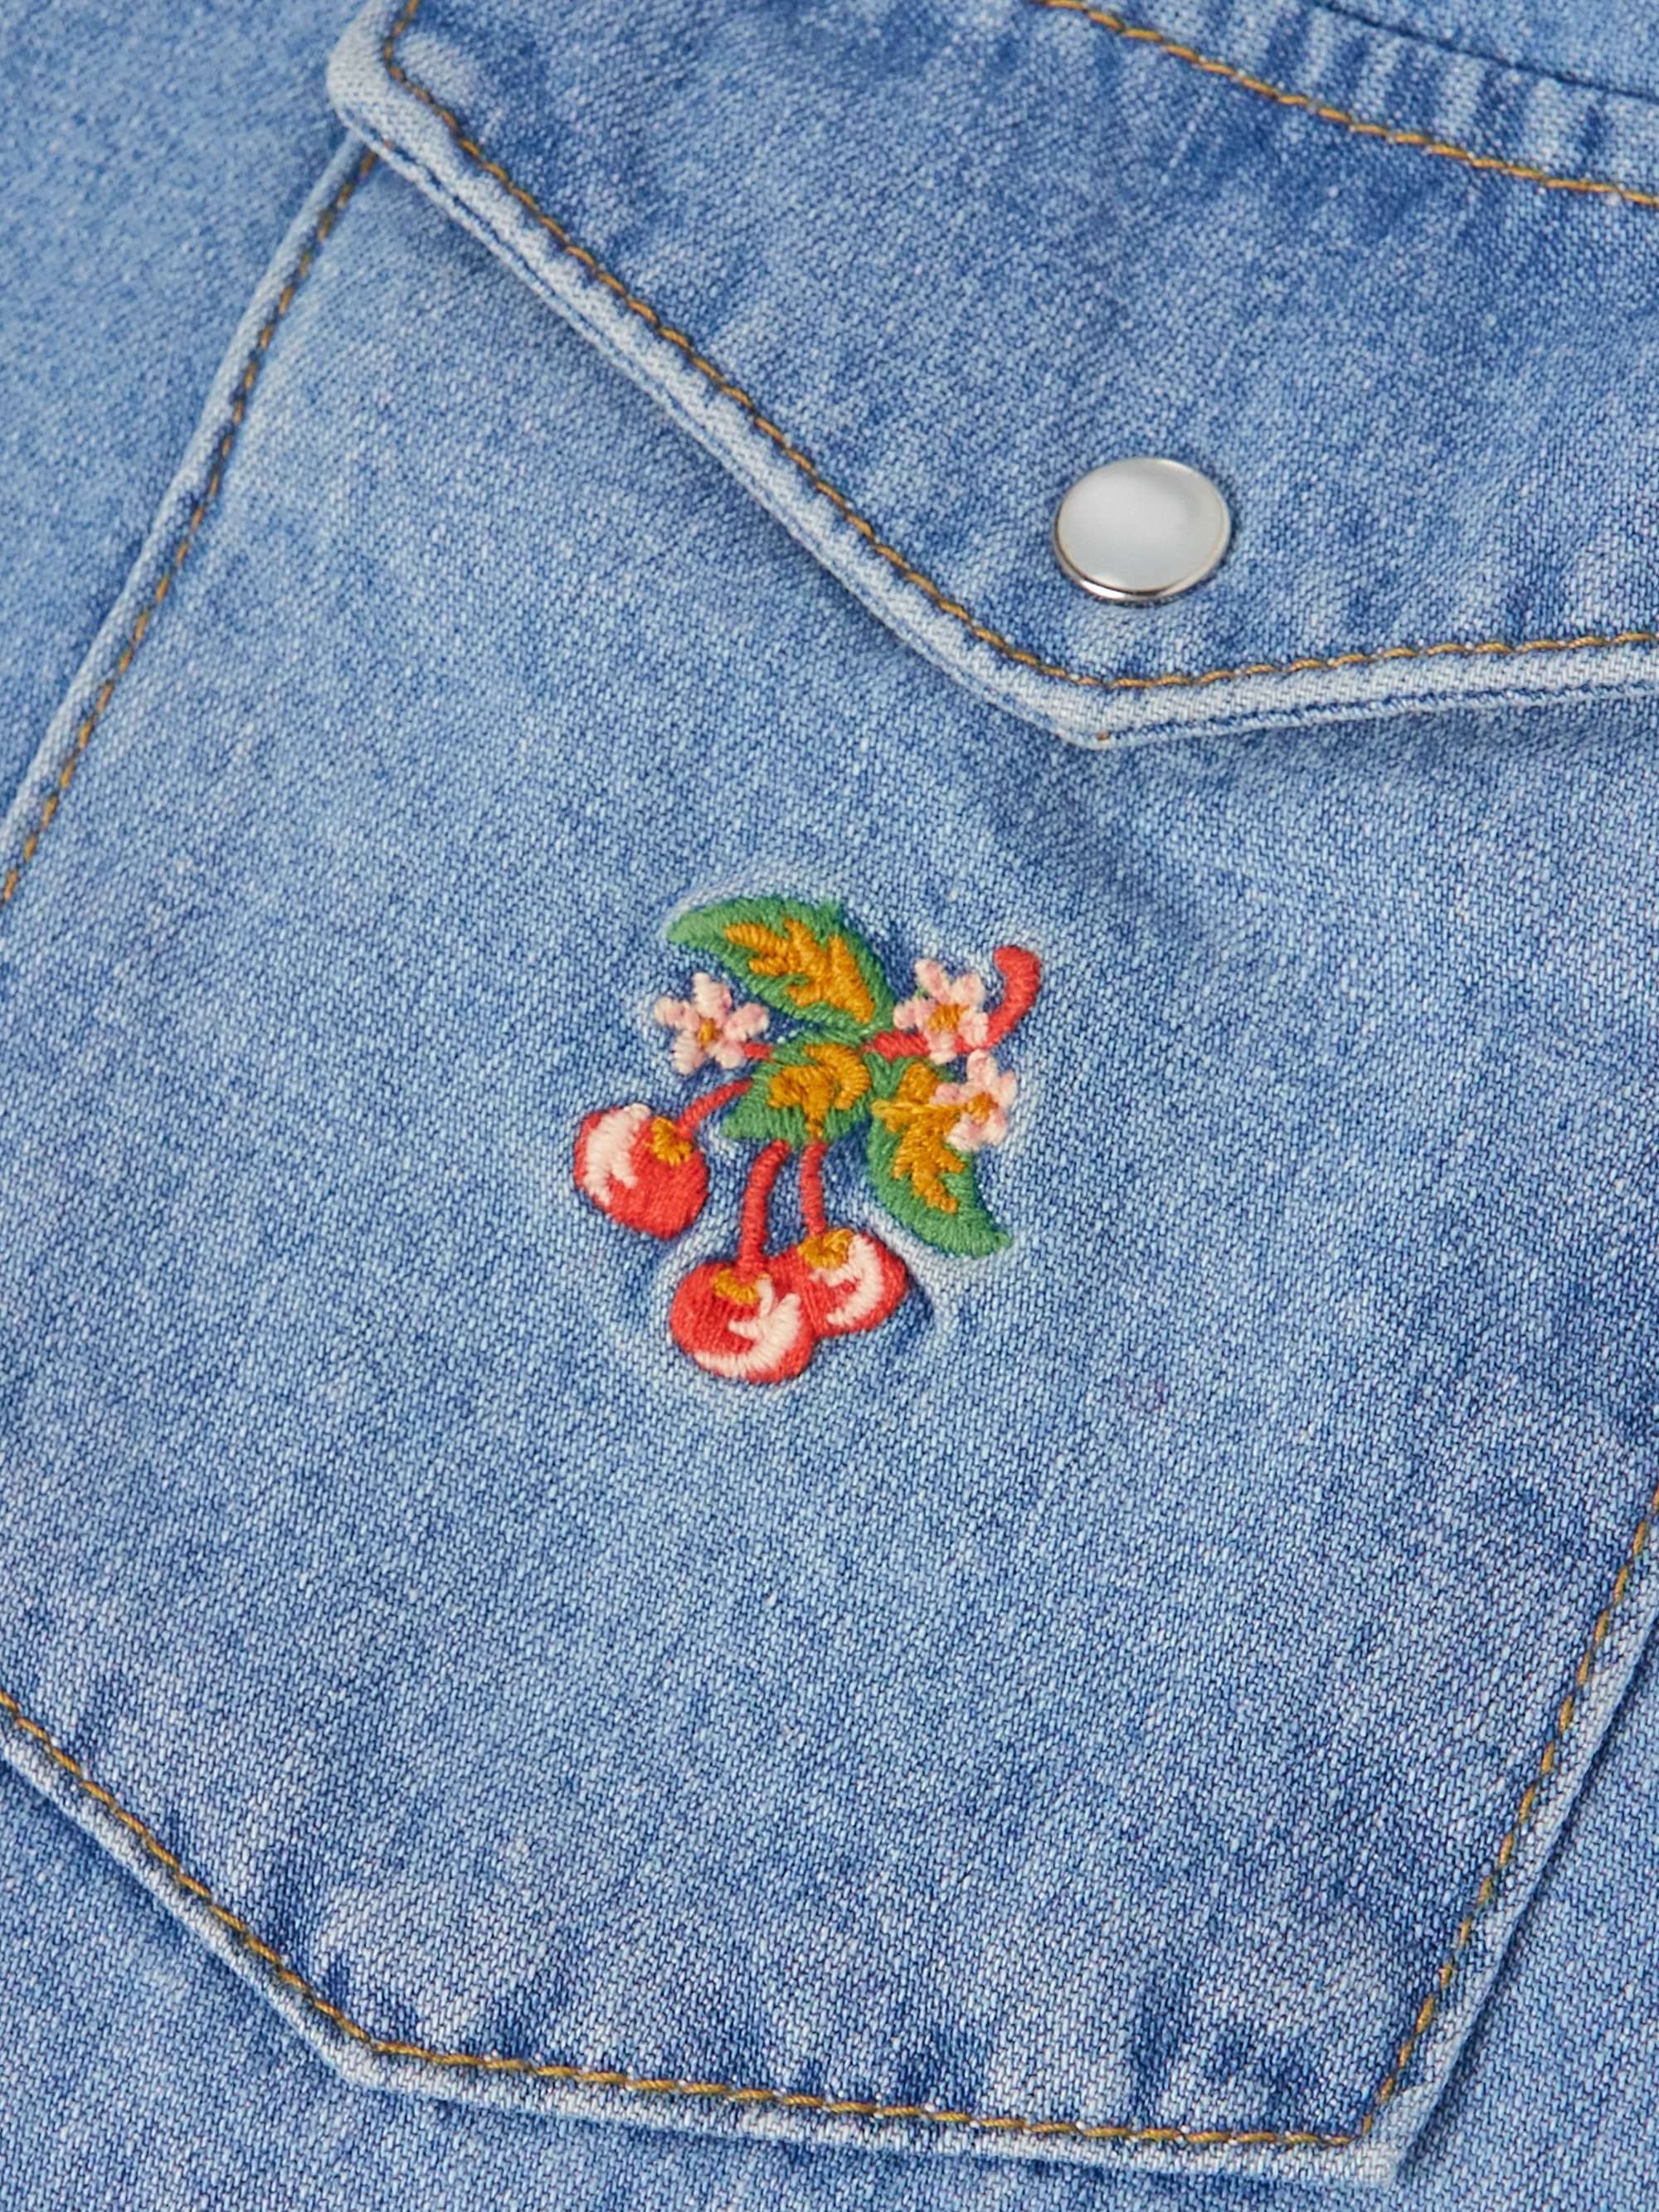 CHERRY LA Embroidered Denim Jacket